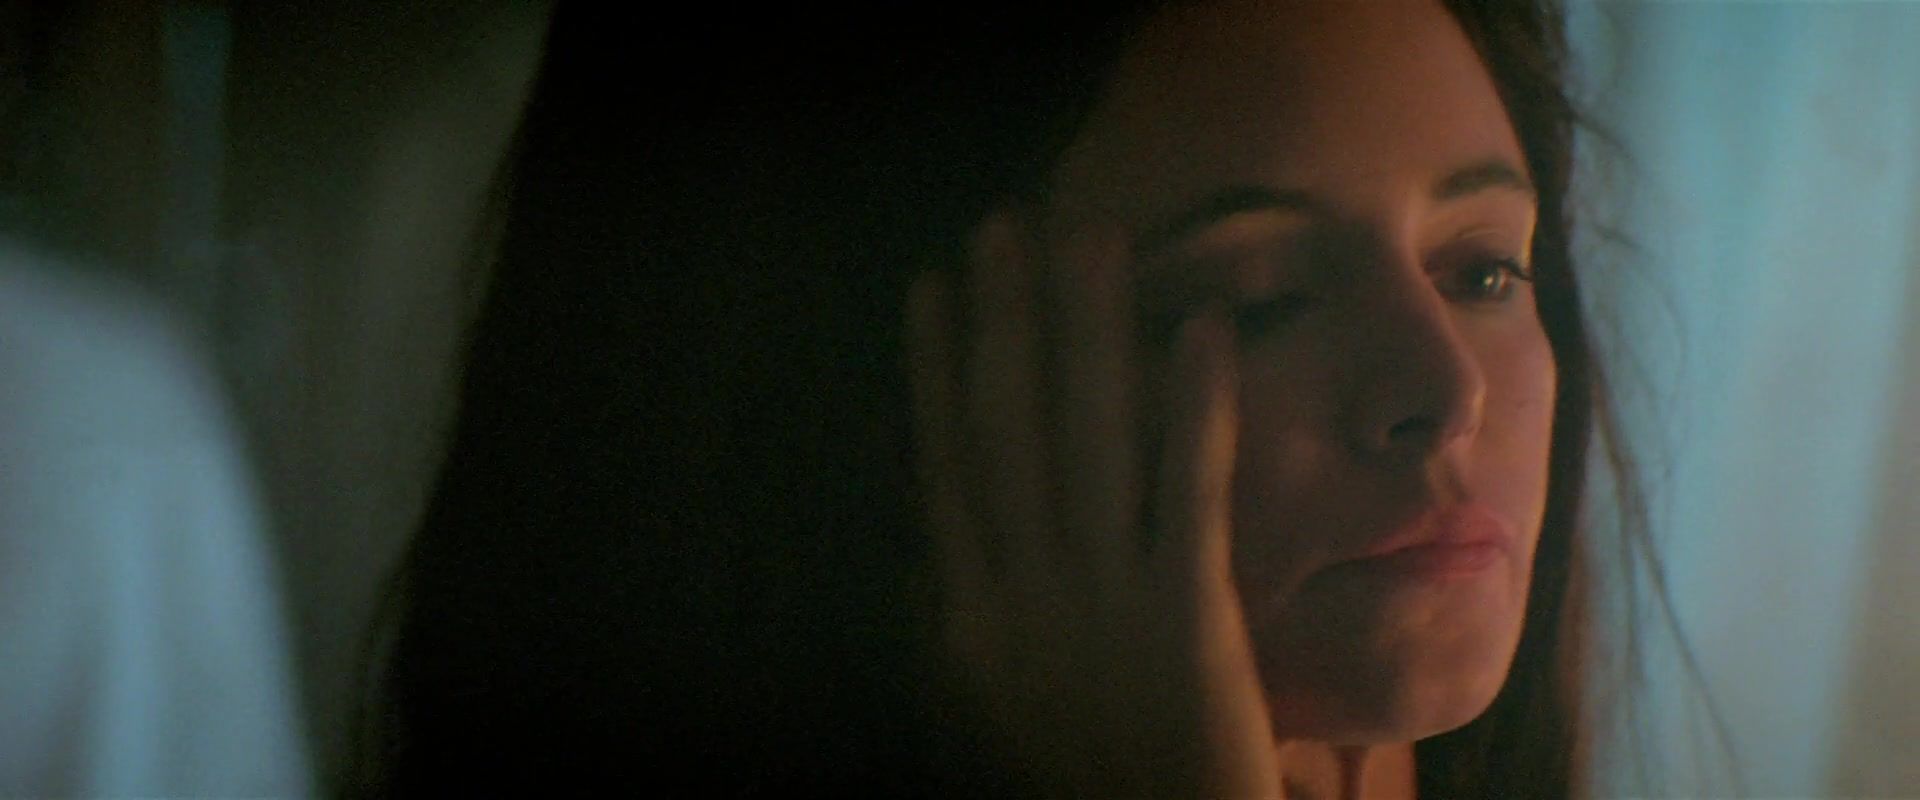 Follando Hot Scene with actress Madeleine Stowe | The movie "Revenge" iChan - 1